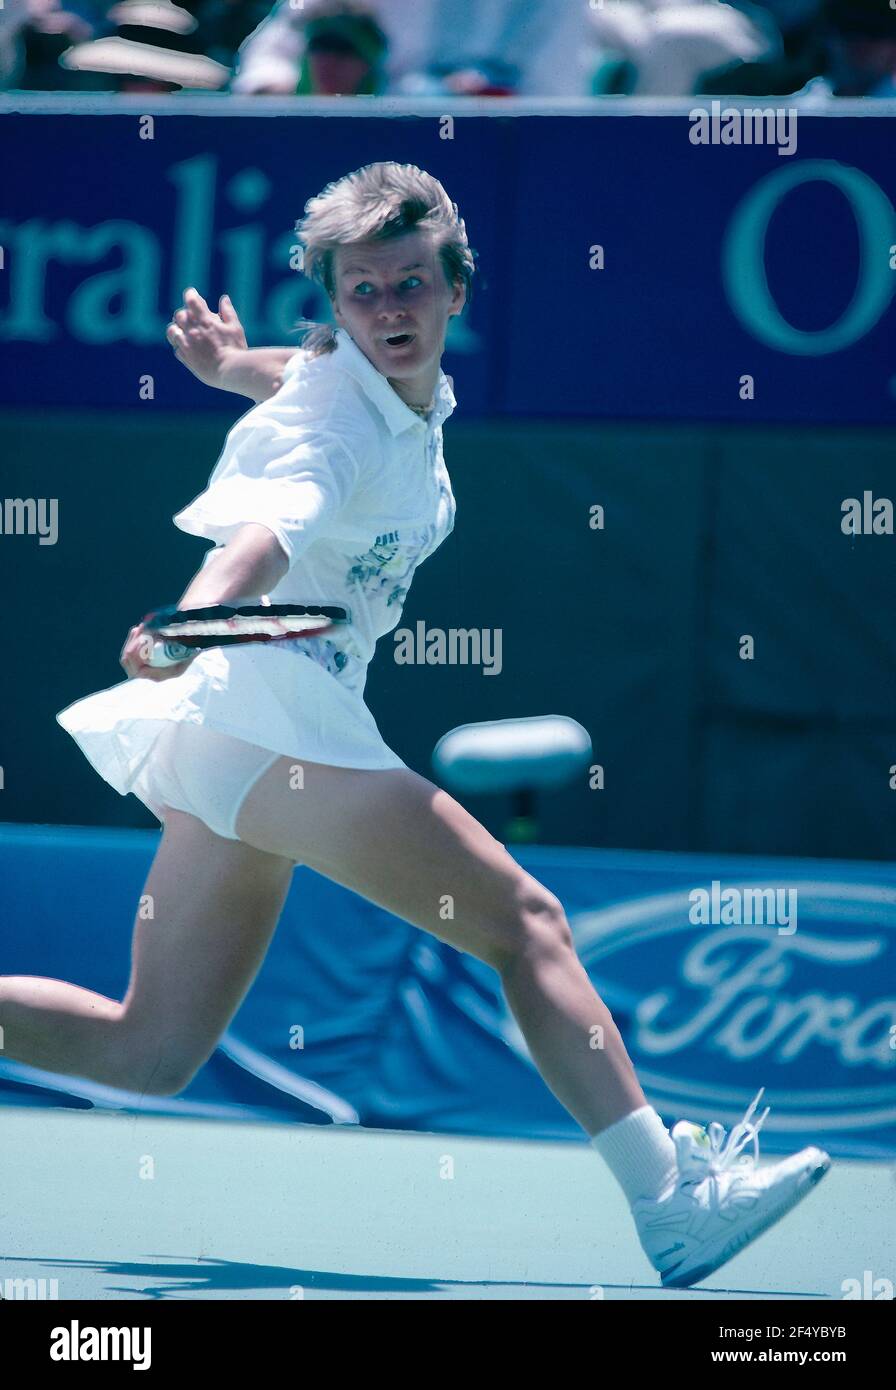 Czech tennis player Jana Novotna, Australian Open 1992 Stock Photo - Alamy